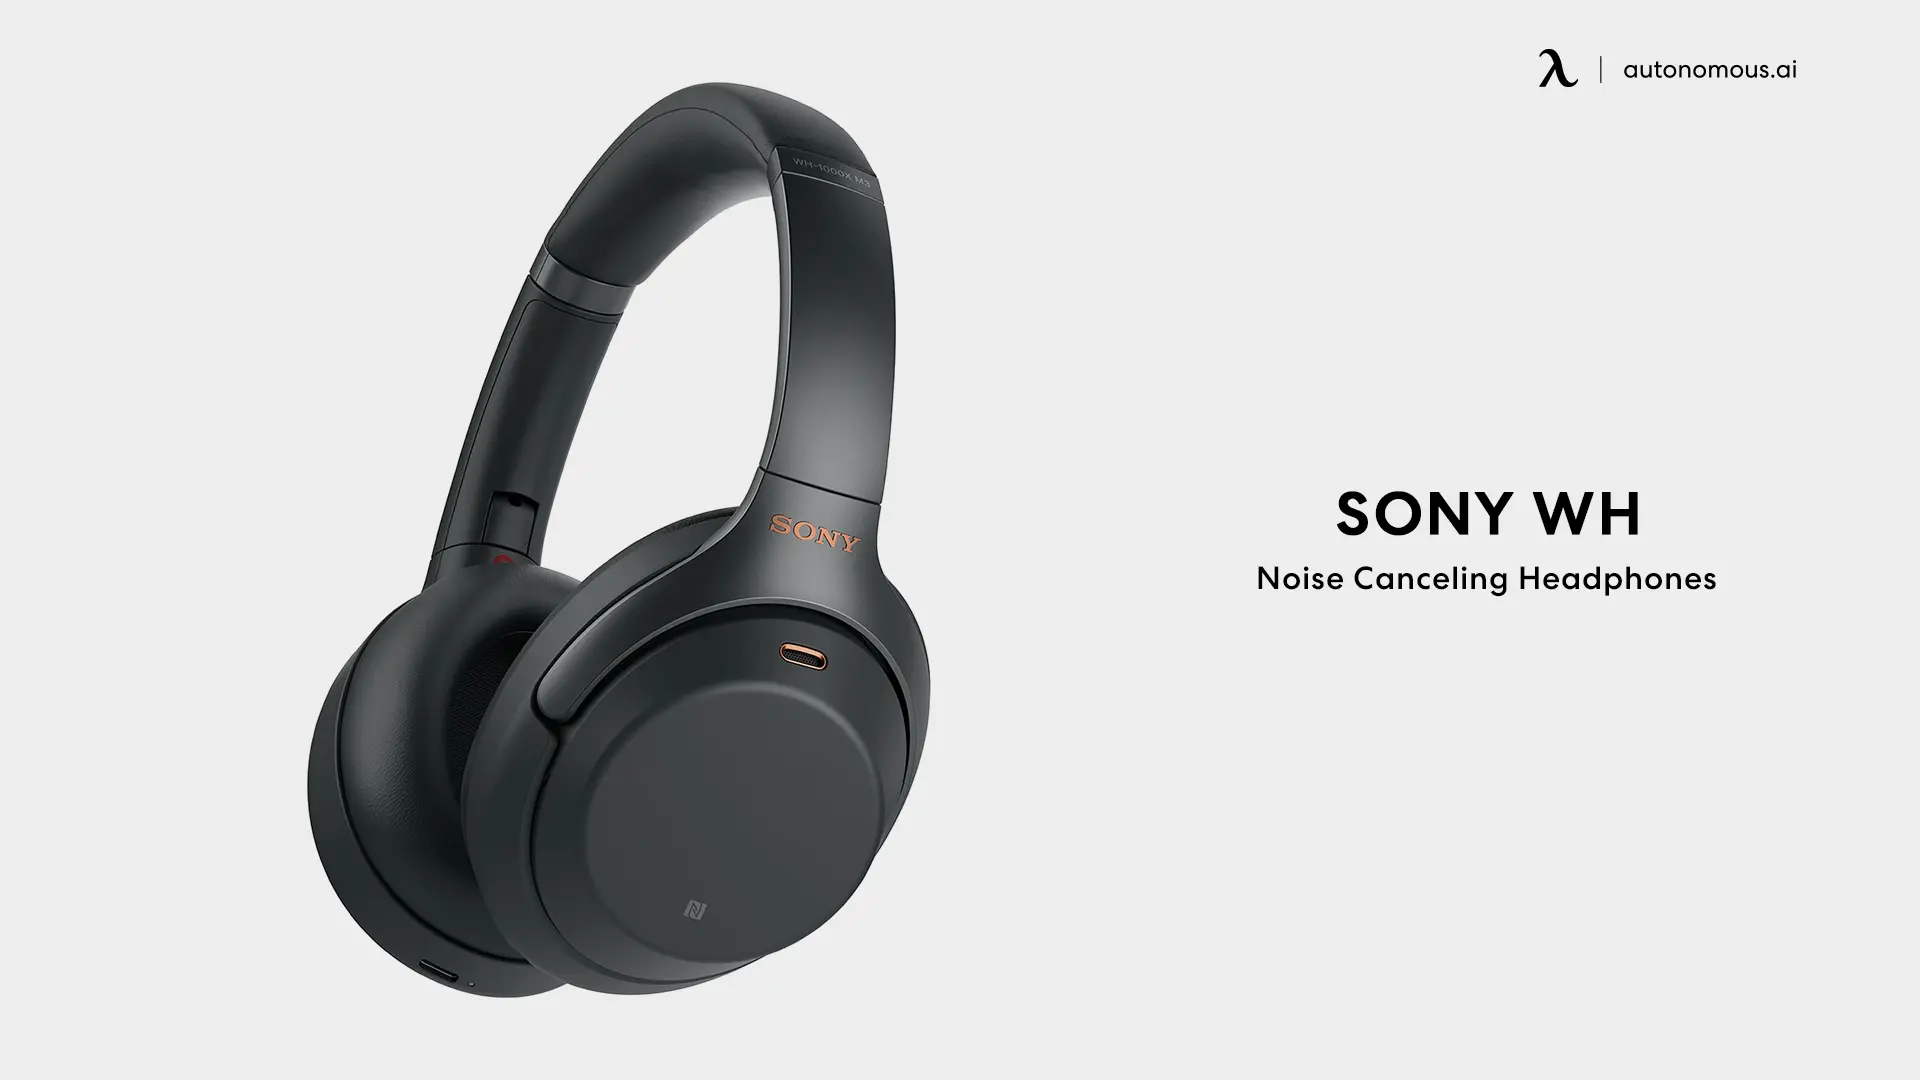 Sony WH Noise Canceling Headphones